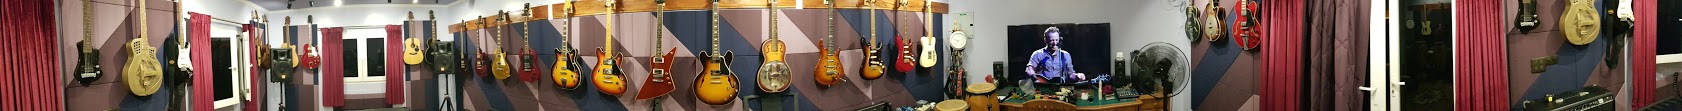 Guitar Room.jpg